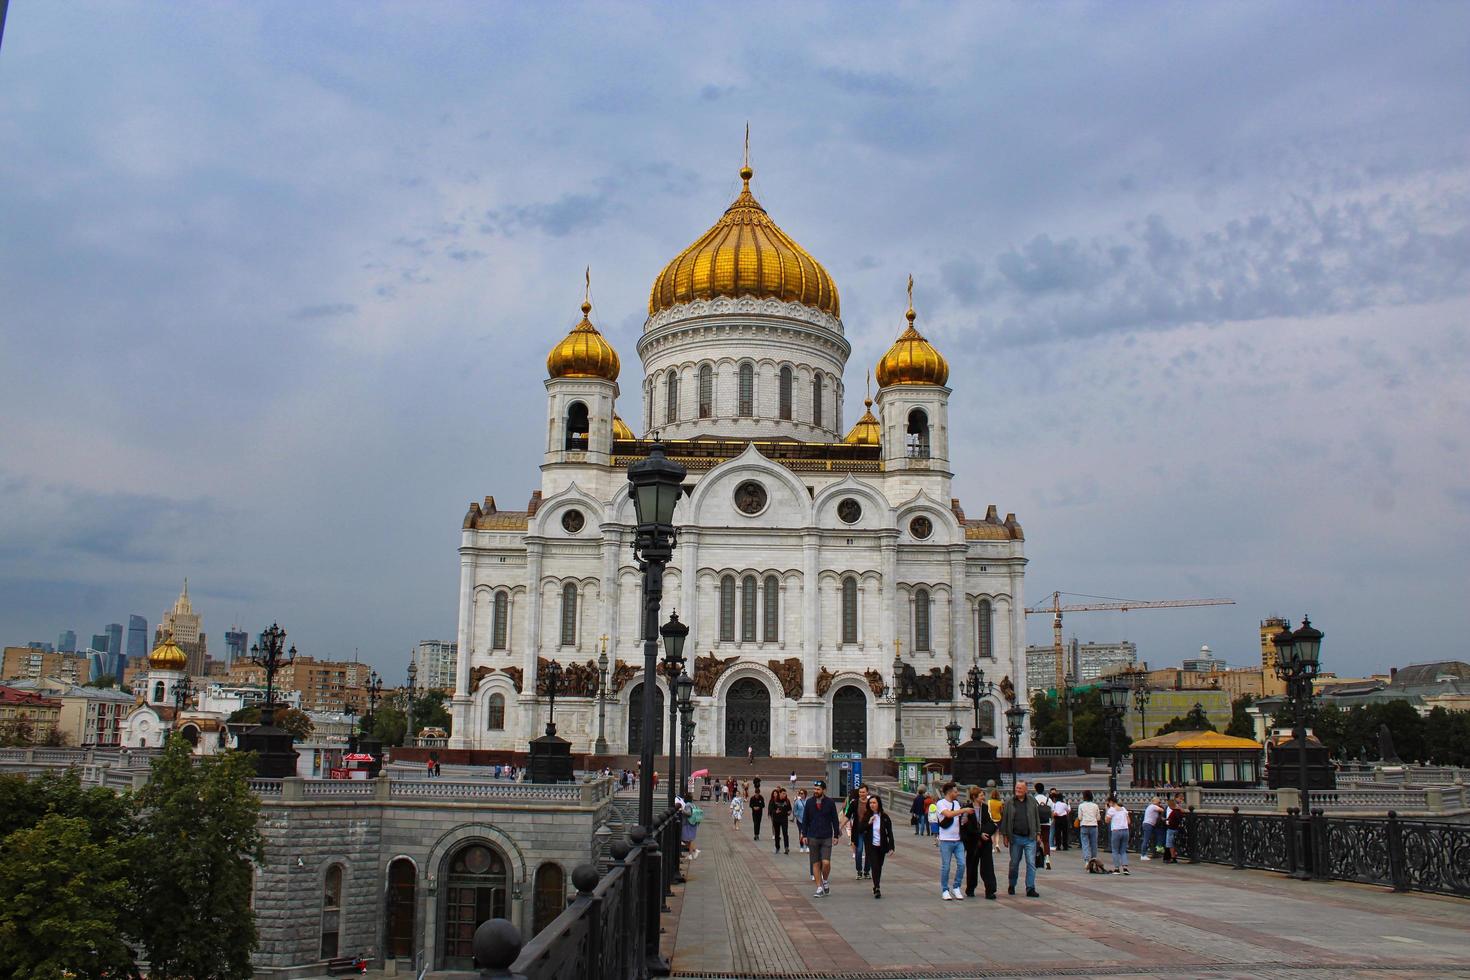 Catedral de Cristo Salvador en Moscú foto